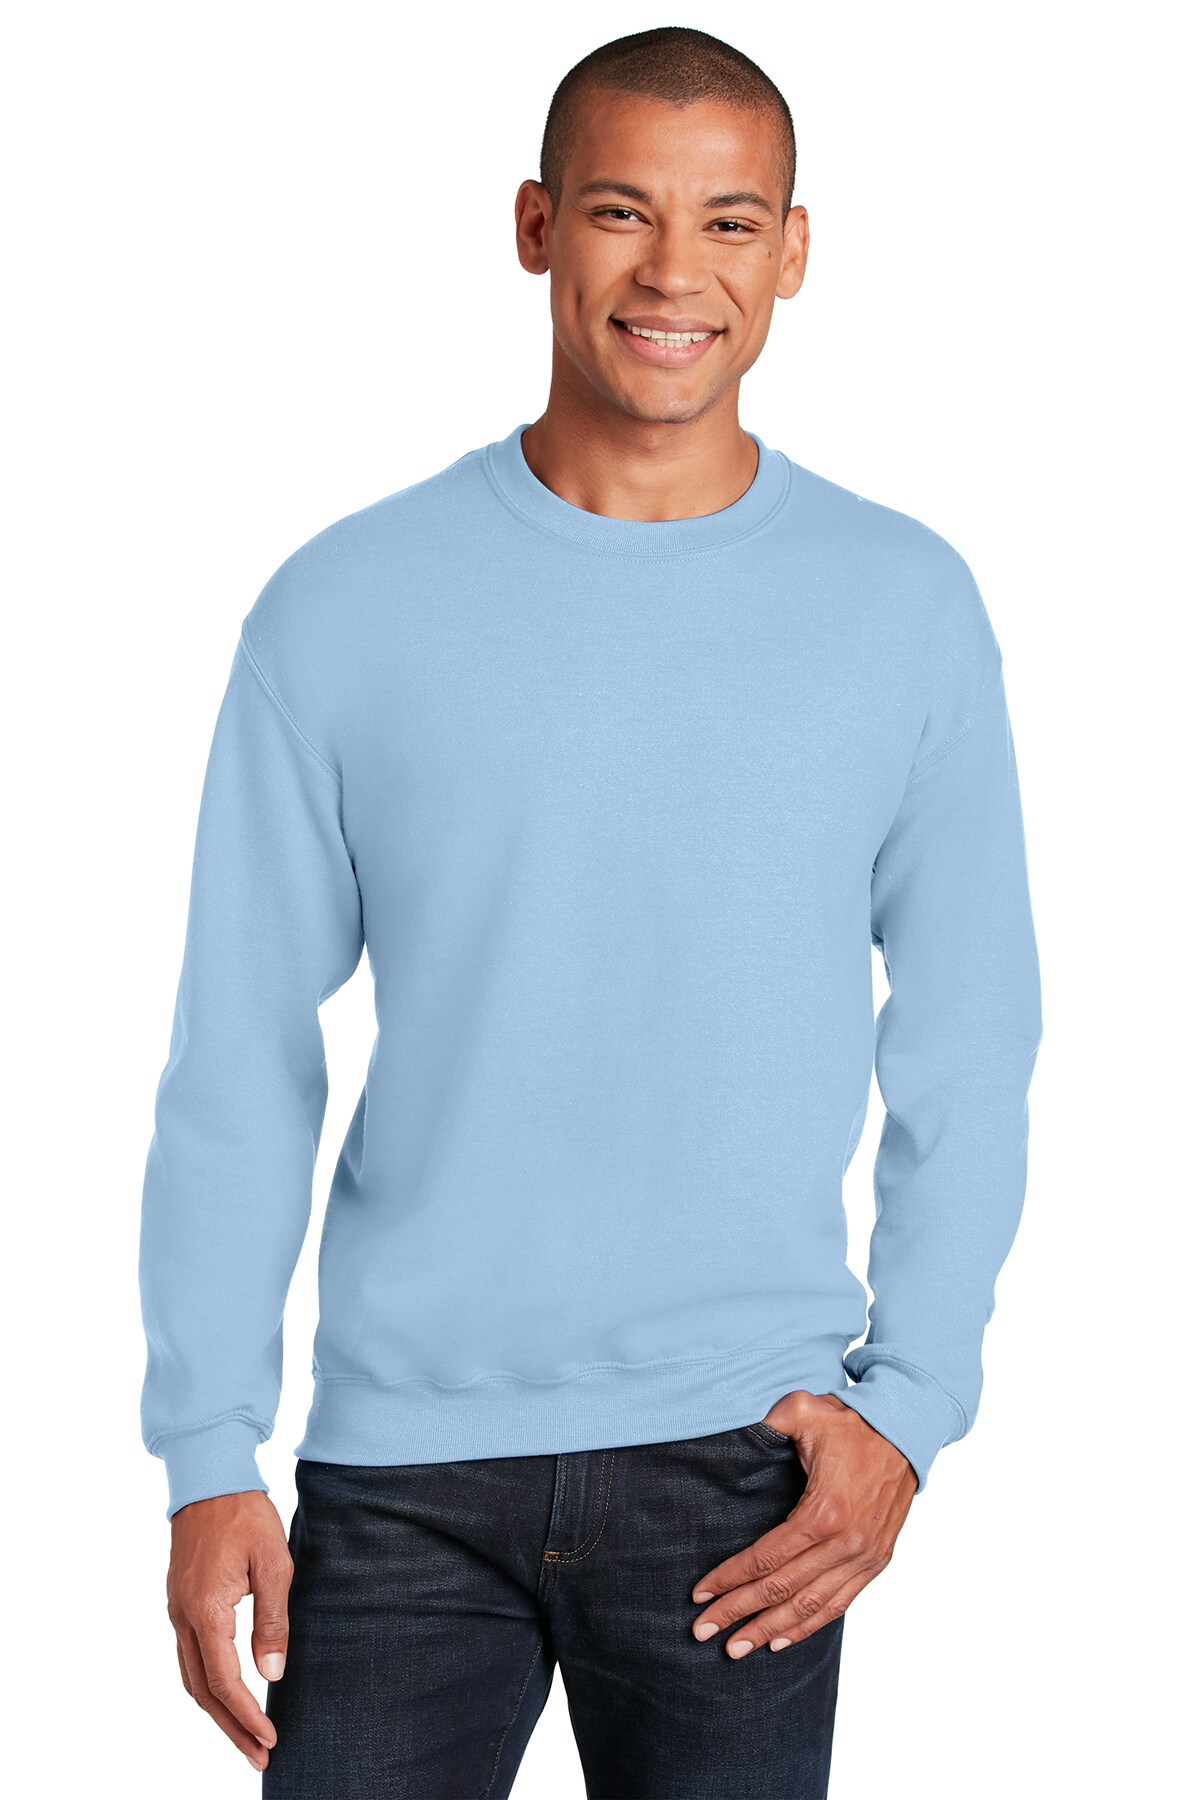 Cozy Pullover Sweater